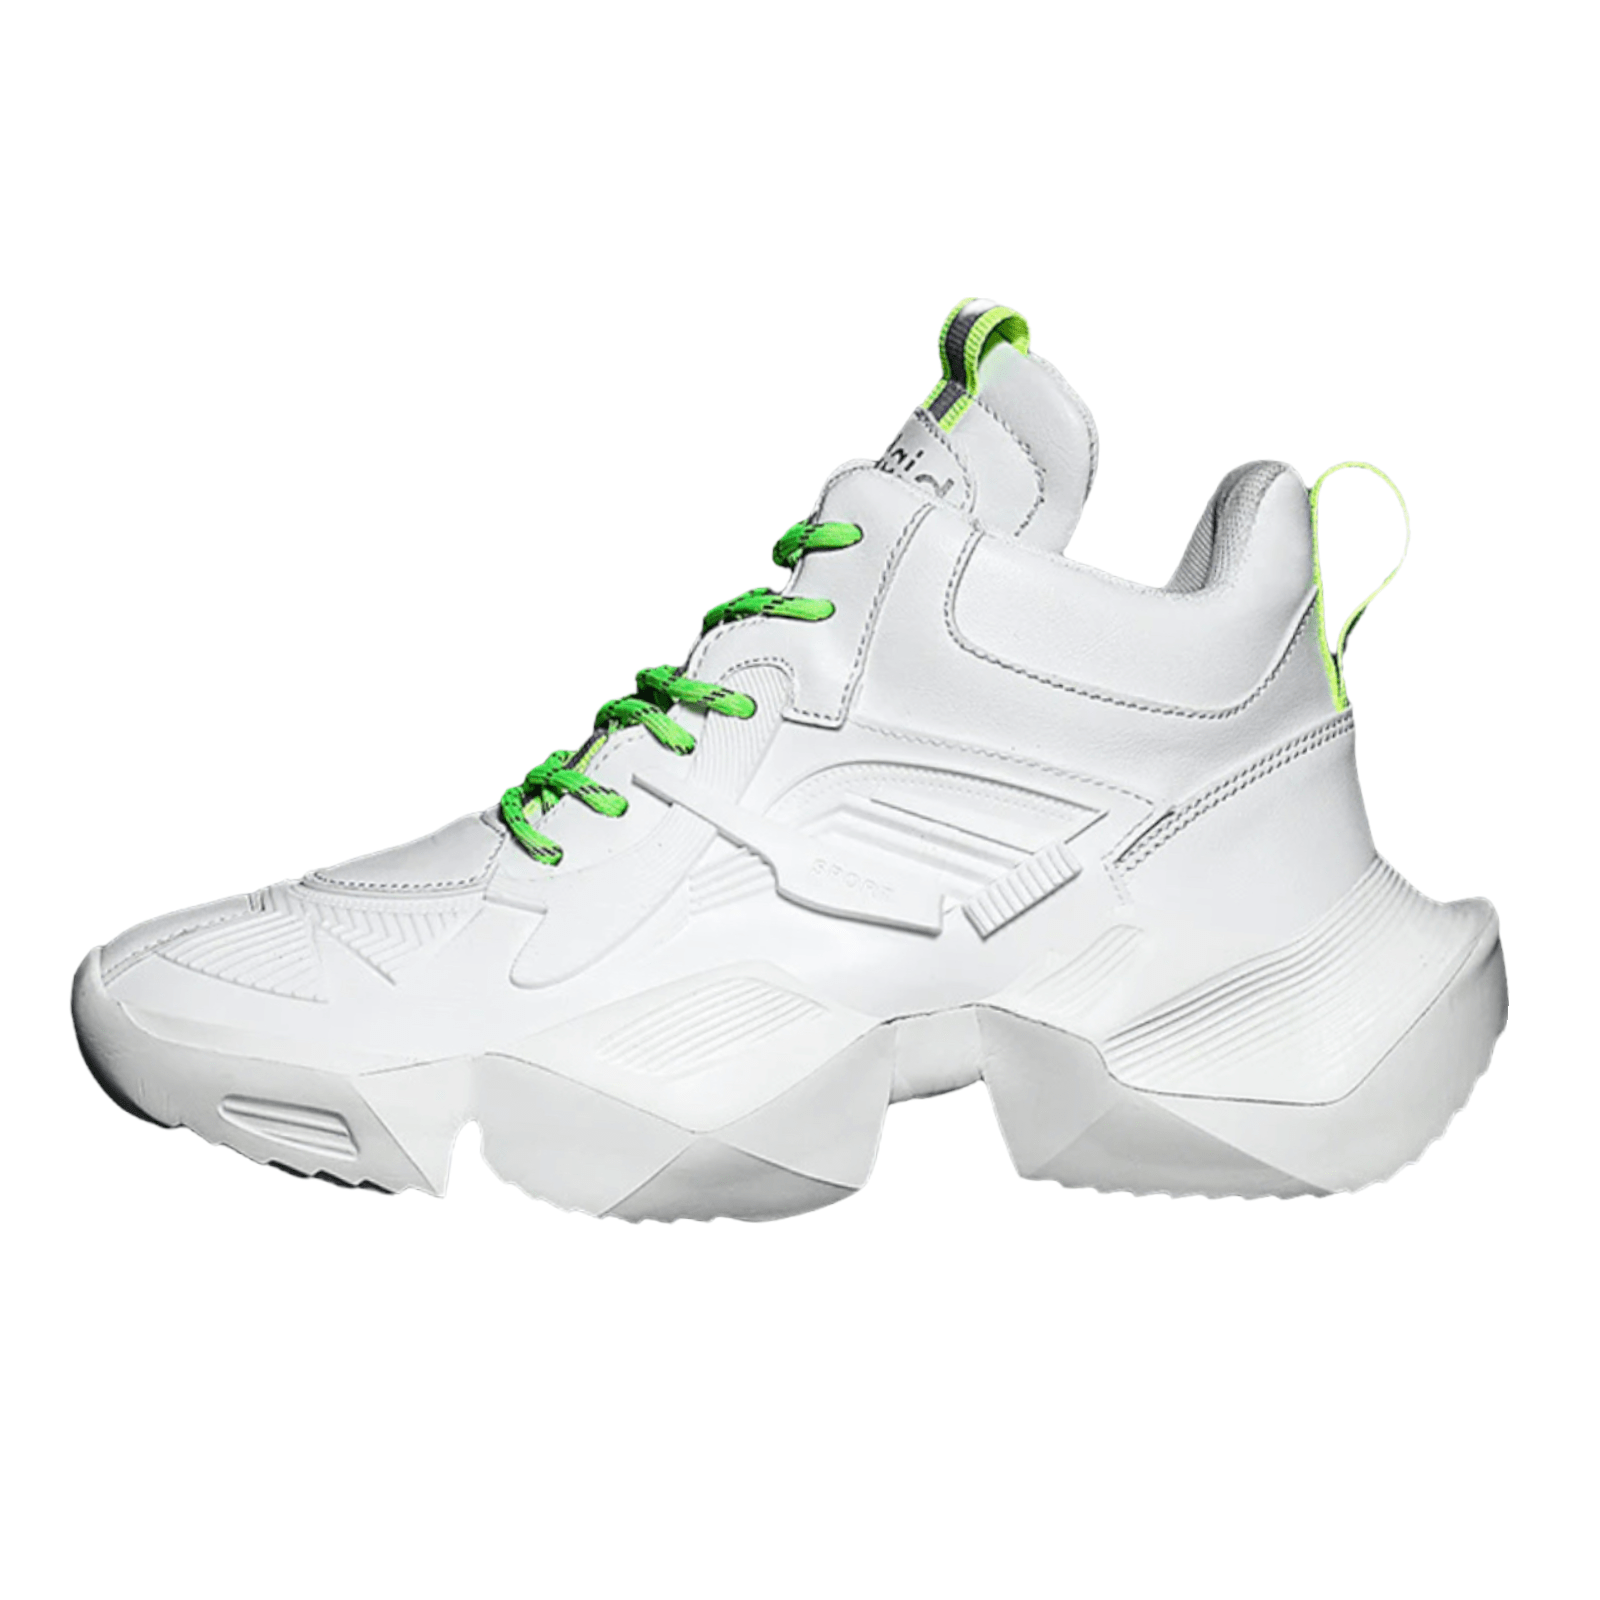 white footweard aquiles sport flashlander left side